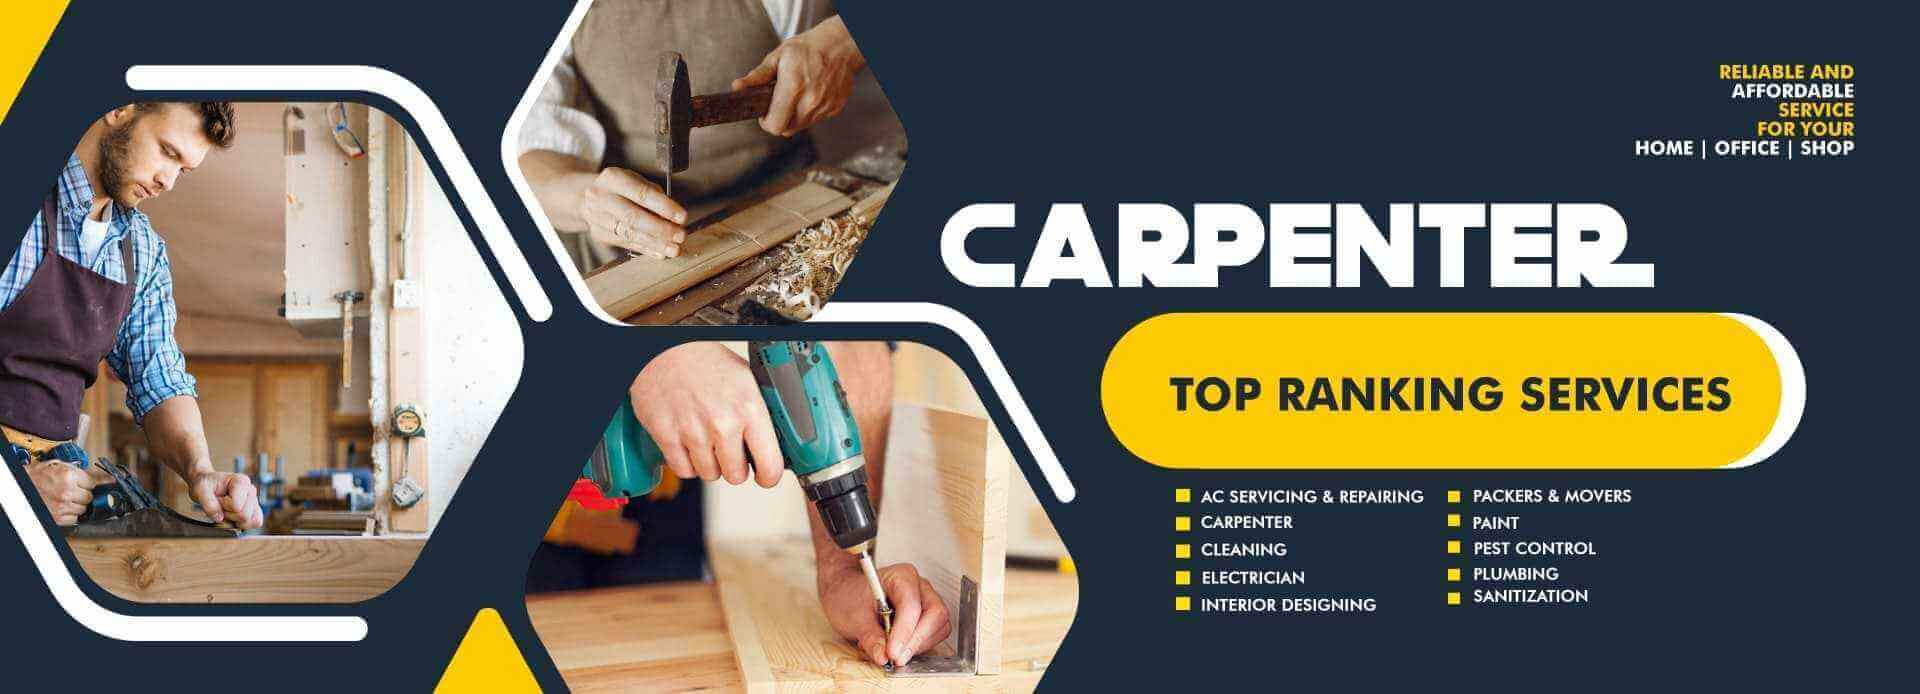 Carpenter service